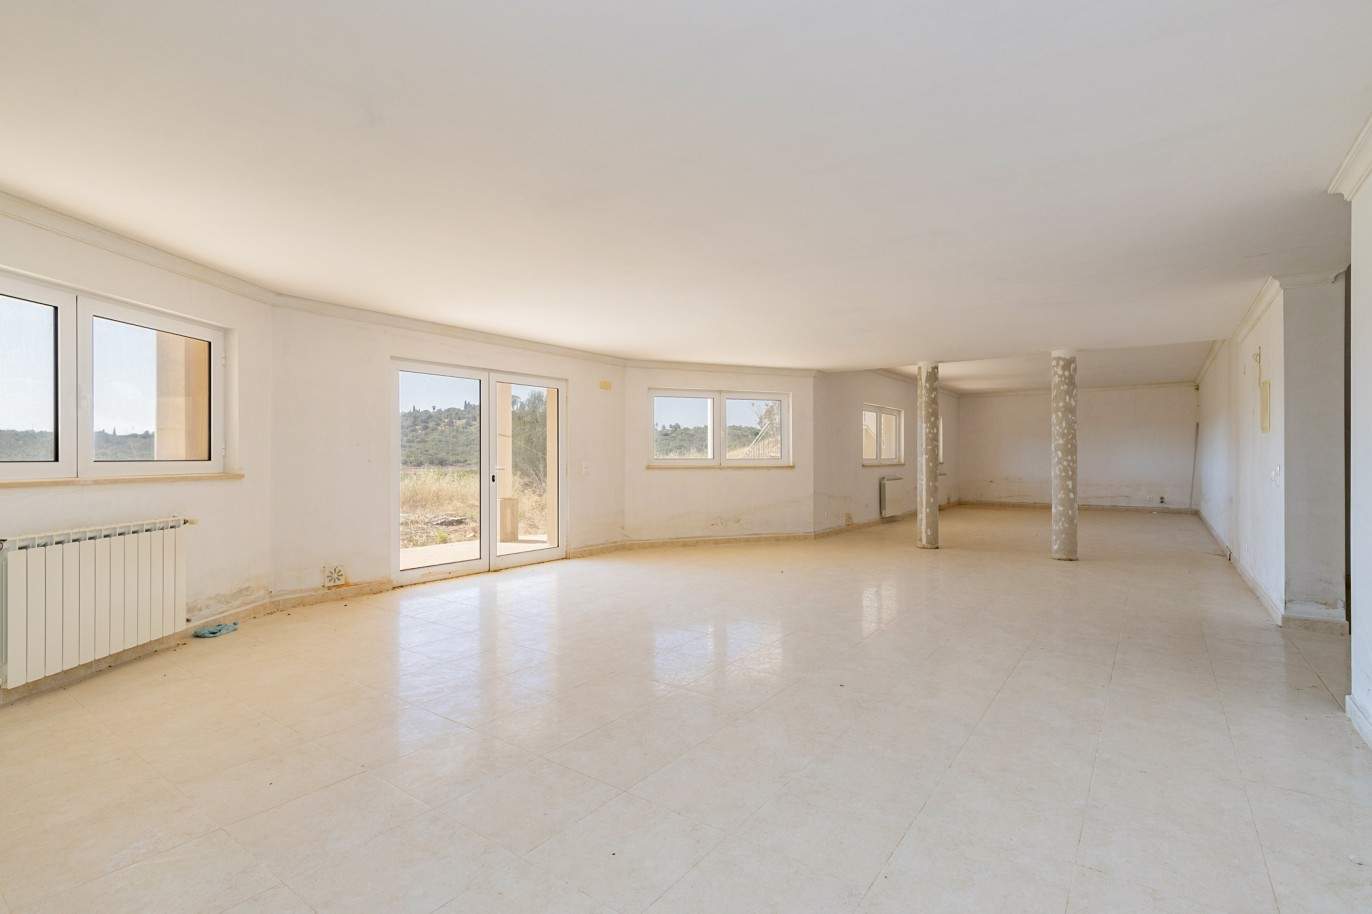 4 Bedroom Villa à vendre à Monte Judeu, Portimão, Algarve_207306